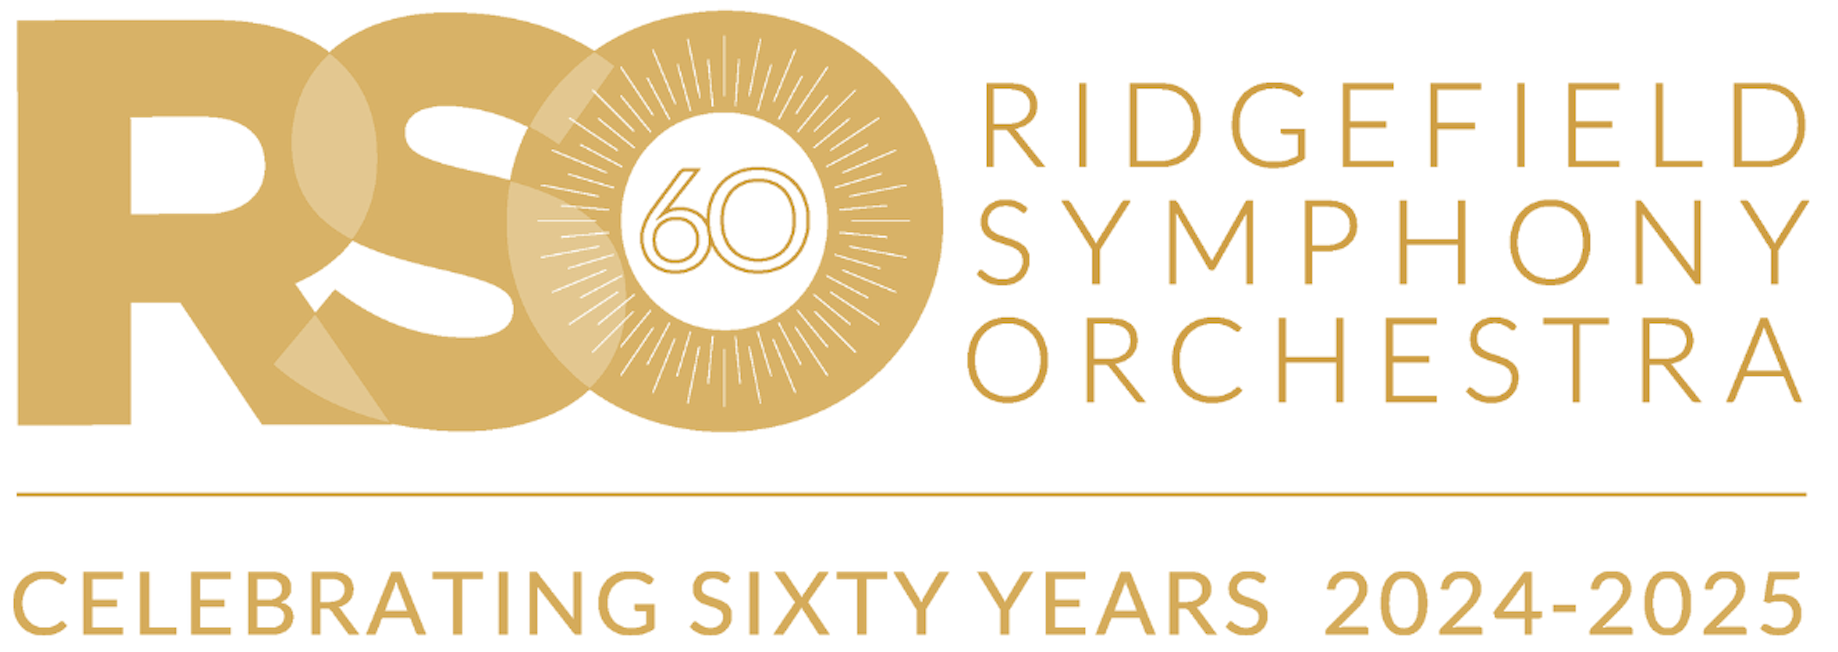 Ridgefield Symphony Orchestra